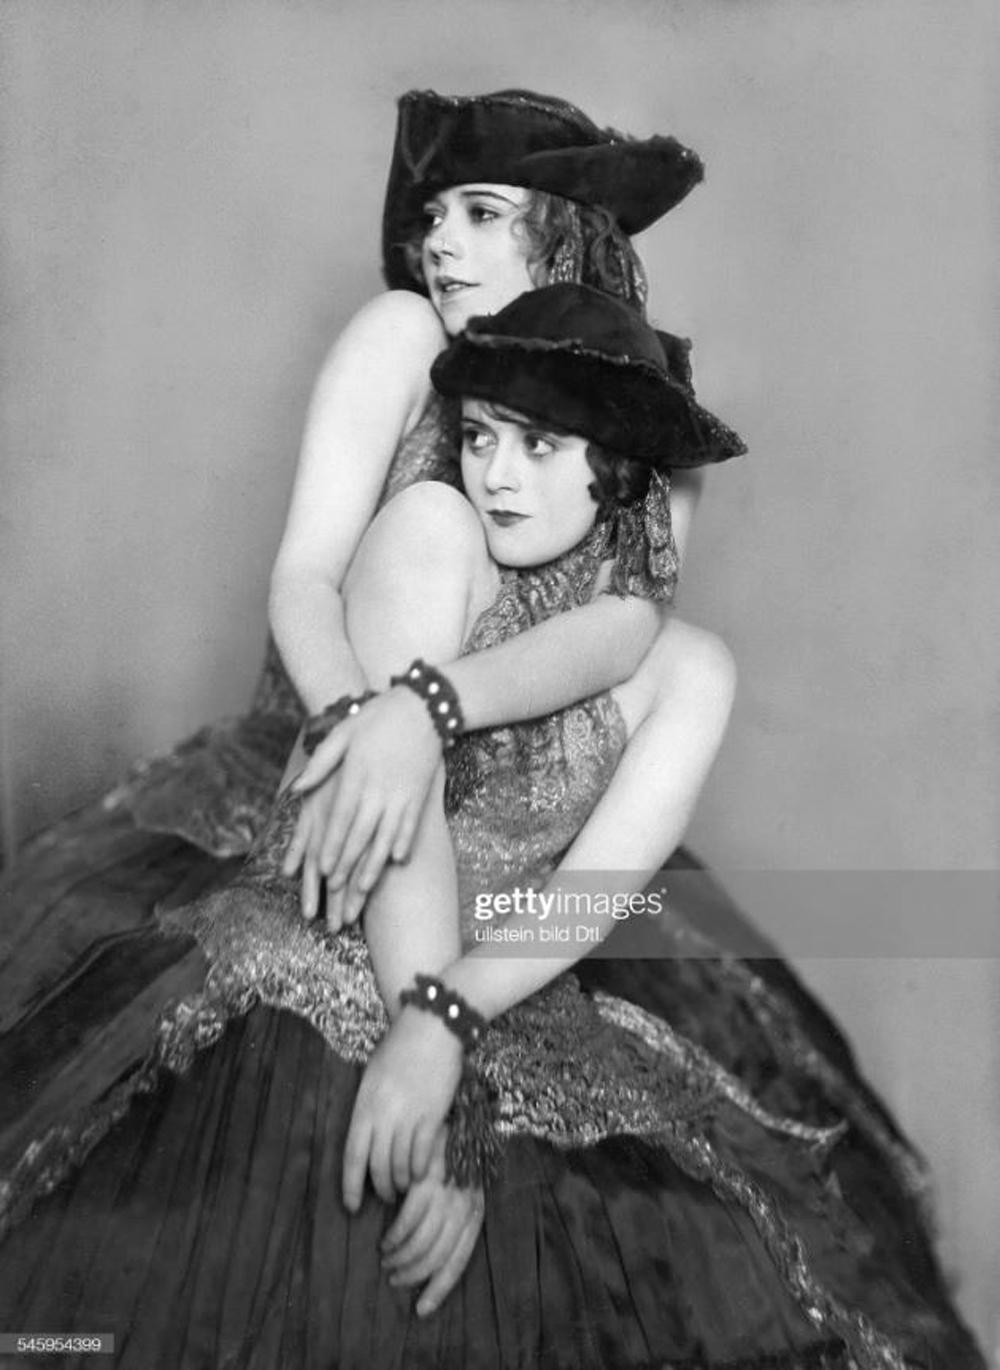  Goldscheider Art Déco Group 'Twin Dancers in Phantasy Costume', Lorenzl ca 1926 For Sale 2